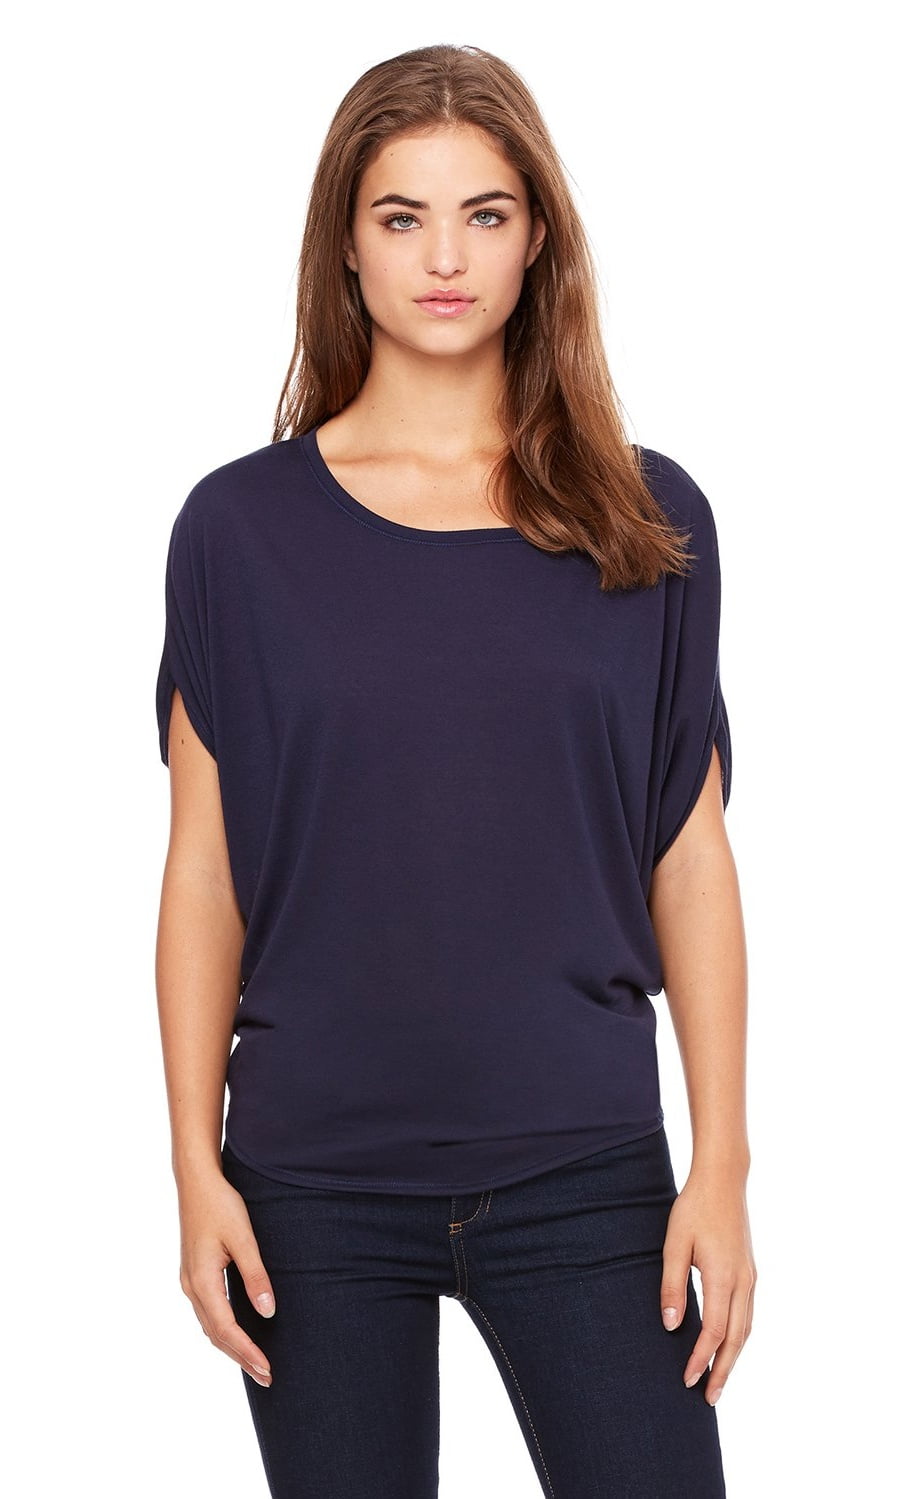 Women's Flowy Short Sleeve Circle Top - Walmart.com